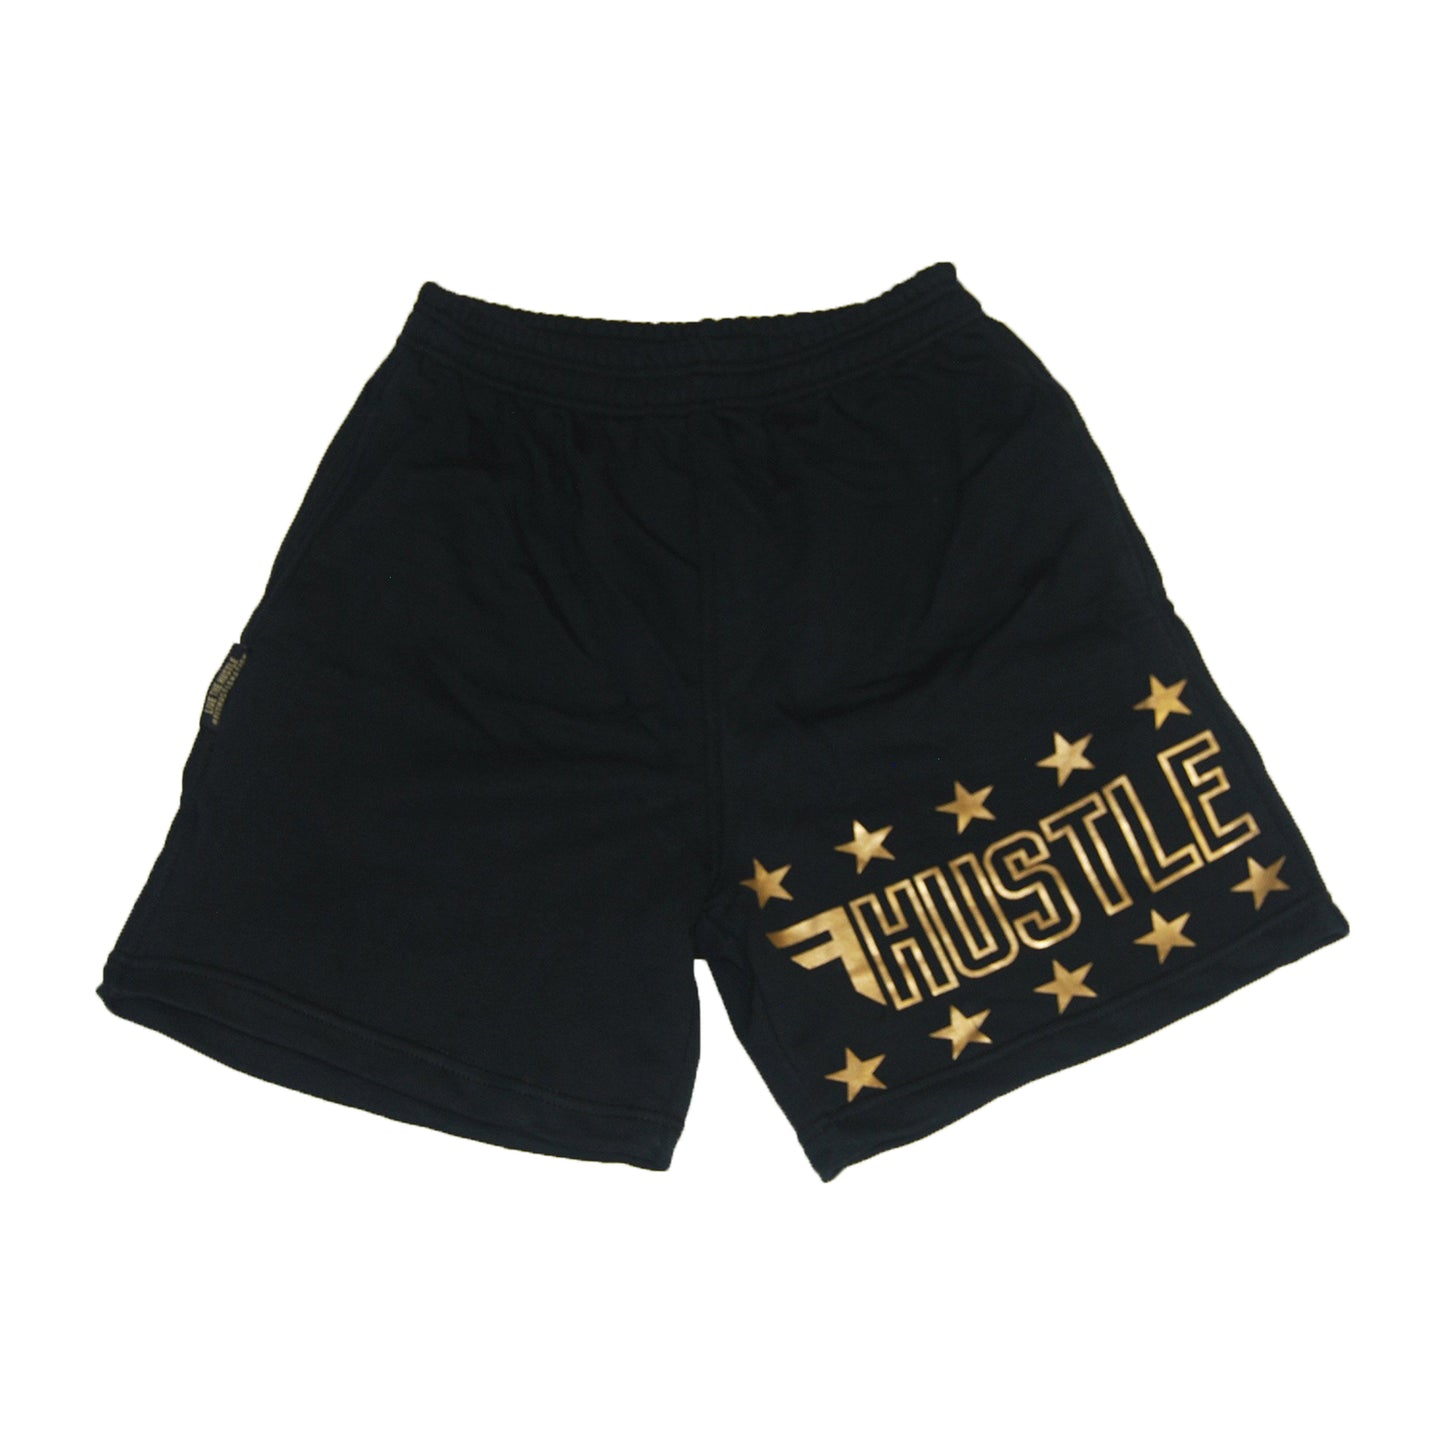 Lightweight Black and Gold Original Sweat Shorts